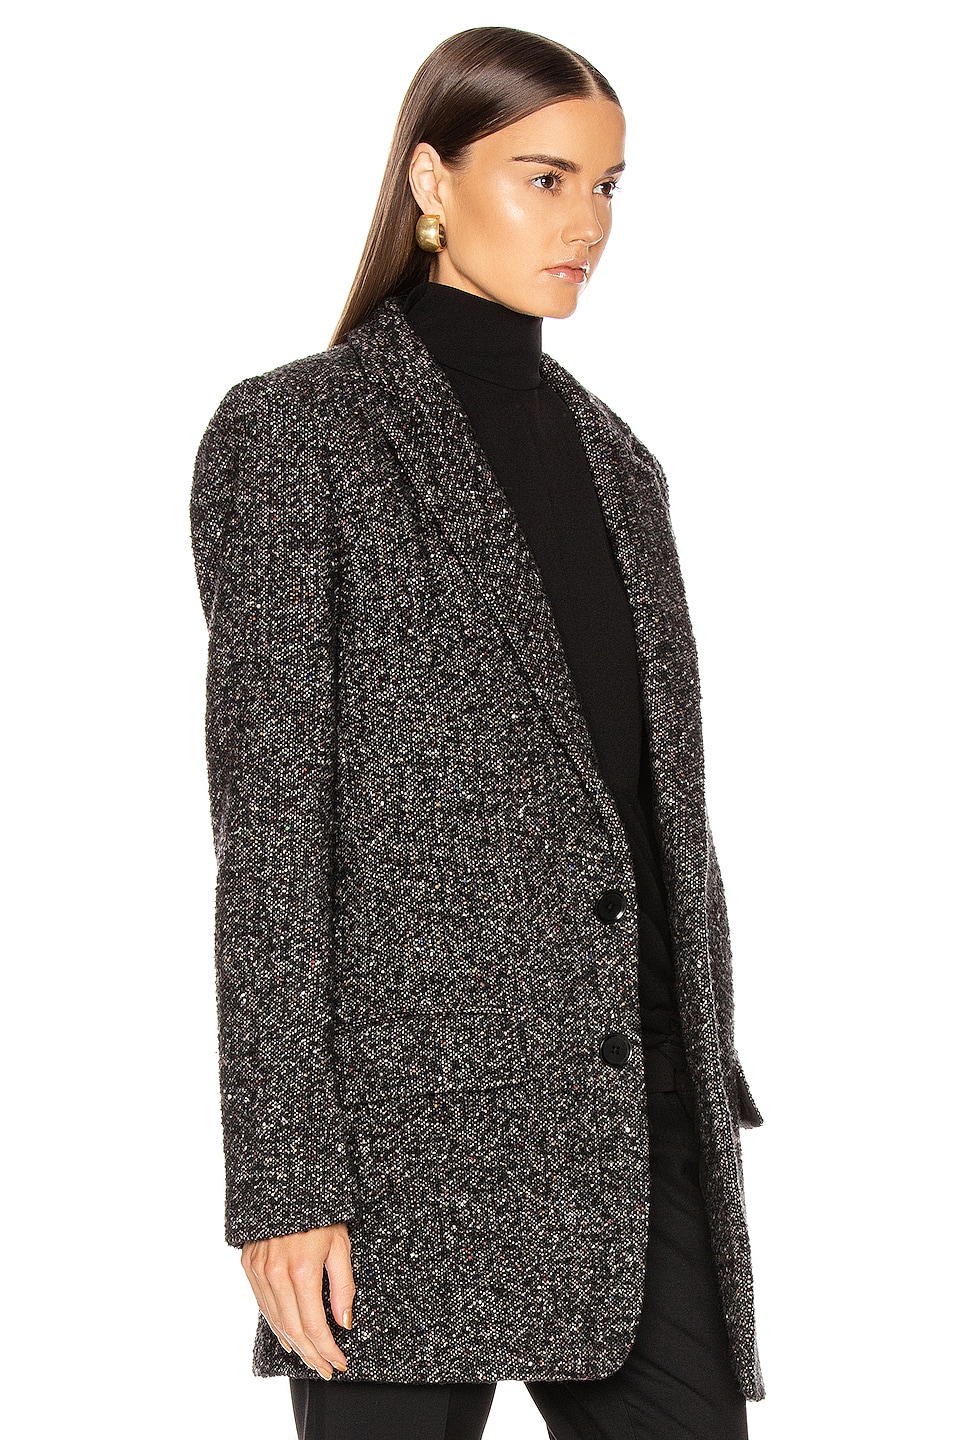 Tibi Multi Color Tweed Long Blazer in Black Multi | FWRD